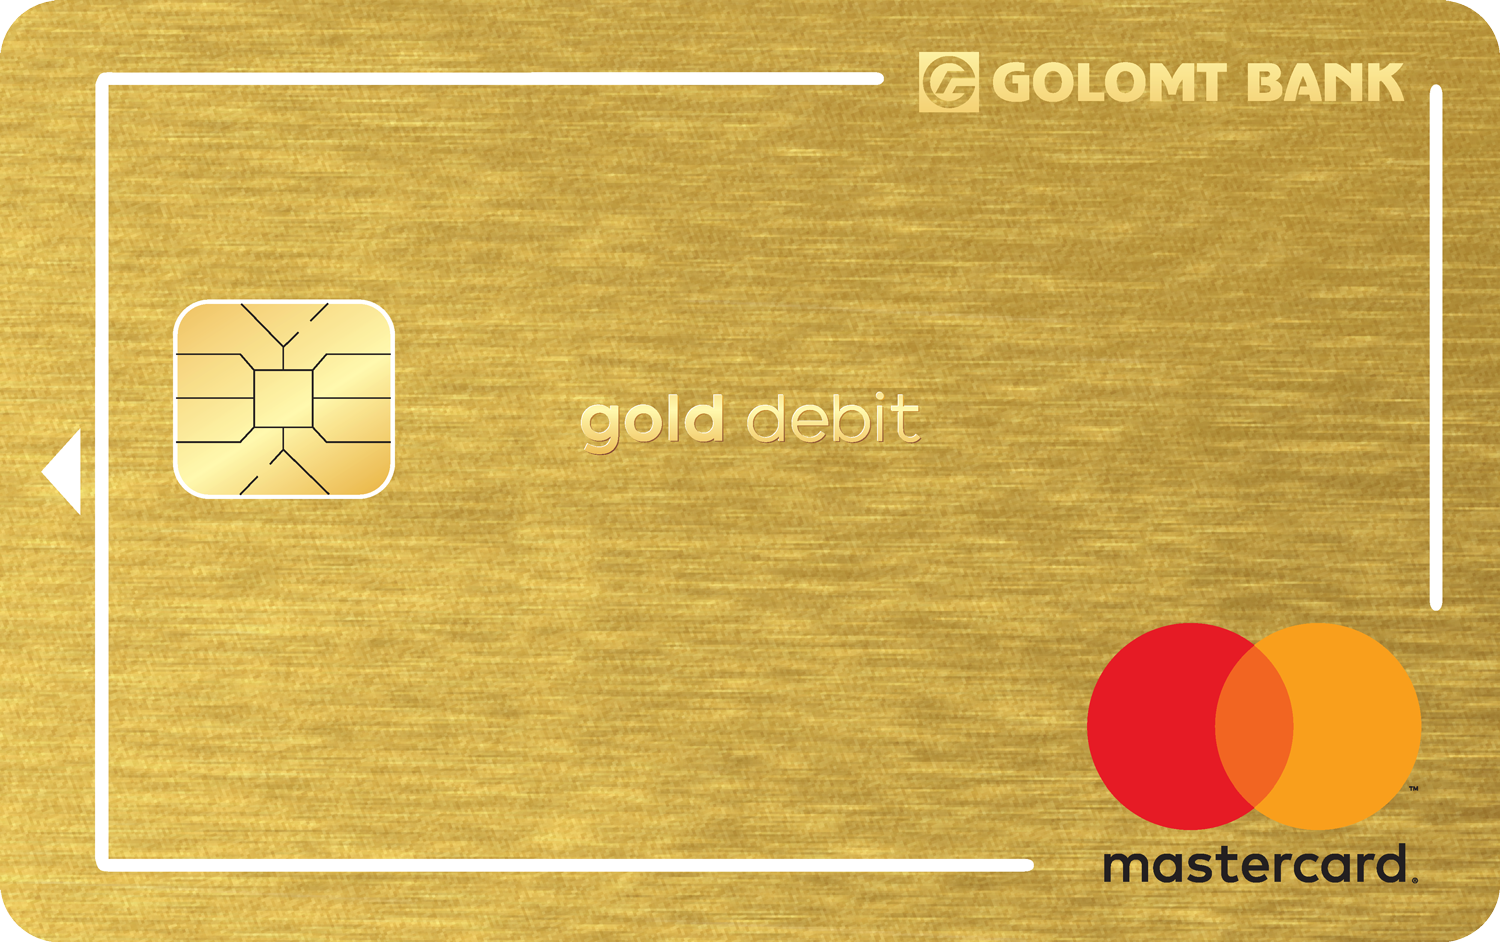 The Gold debit card